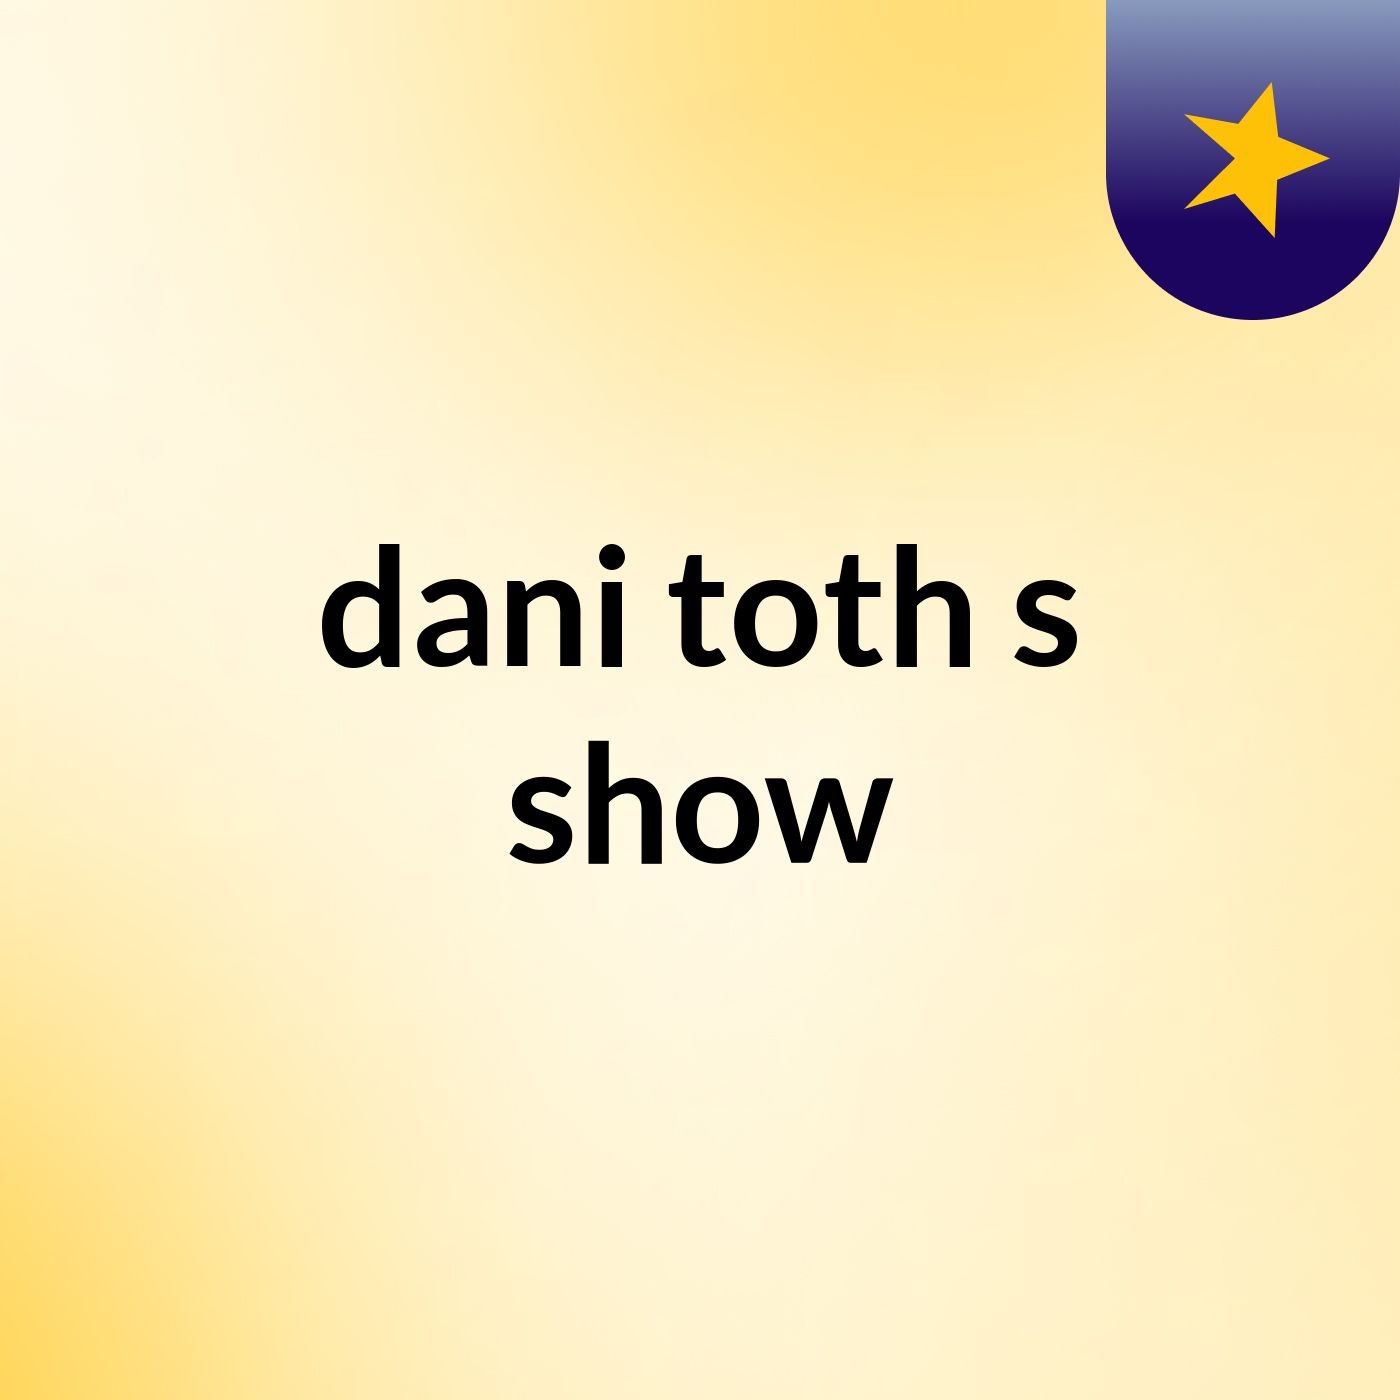 dani toth's show